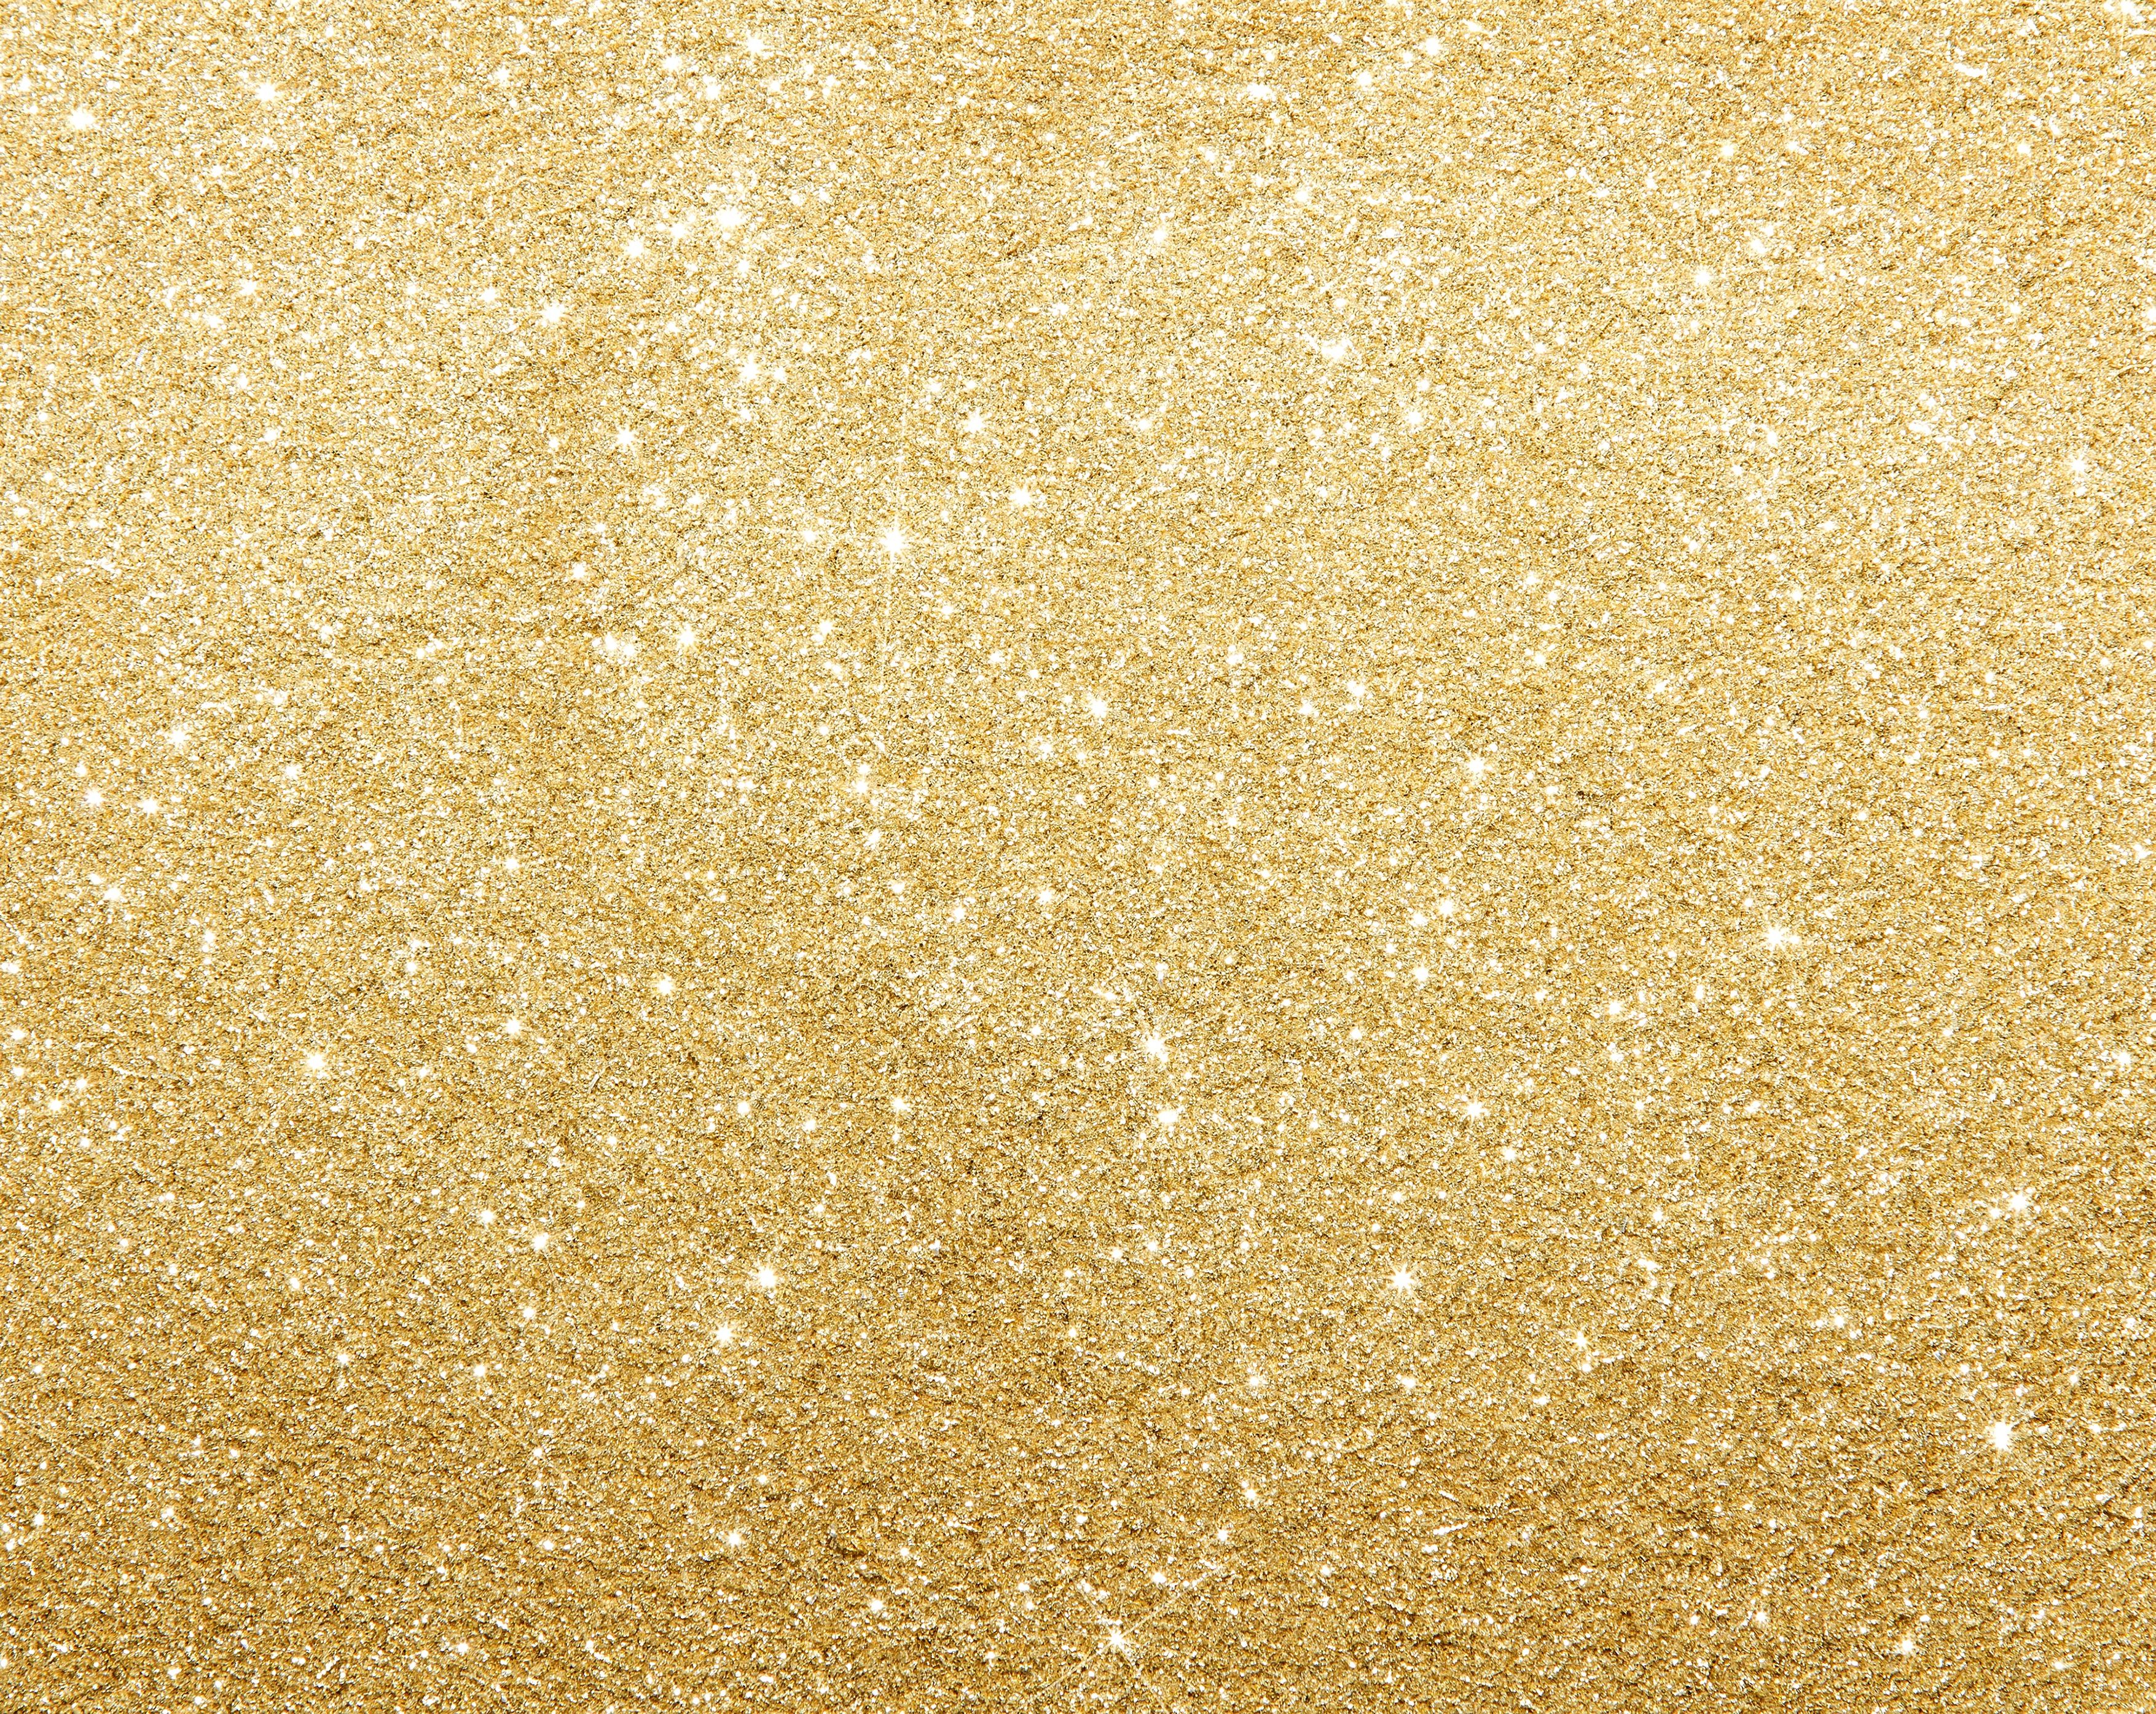 Gold Glitter Iphone Backgrounds Gold glitter t 3509x2789